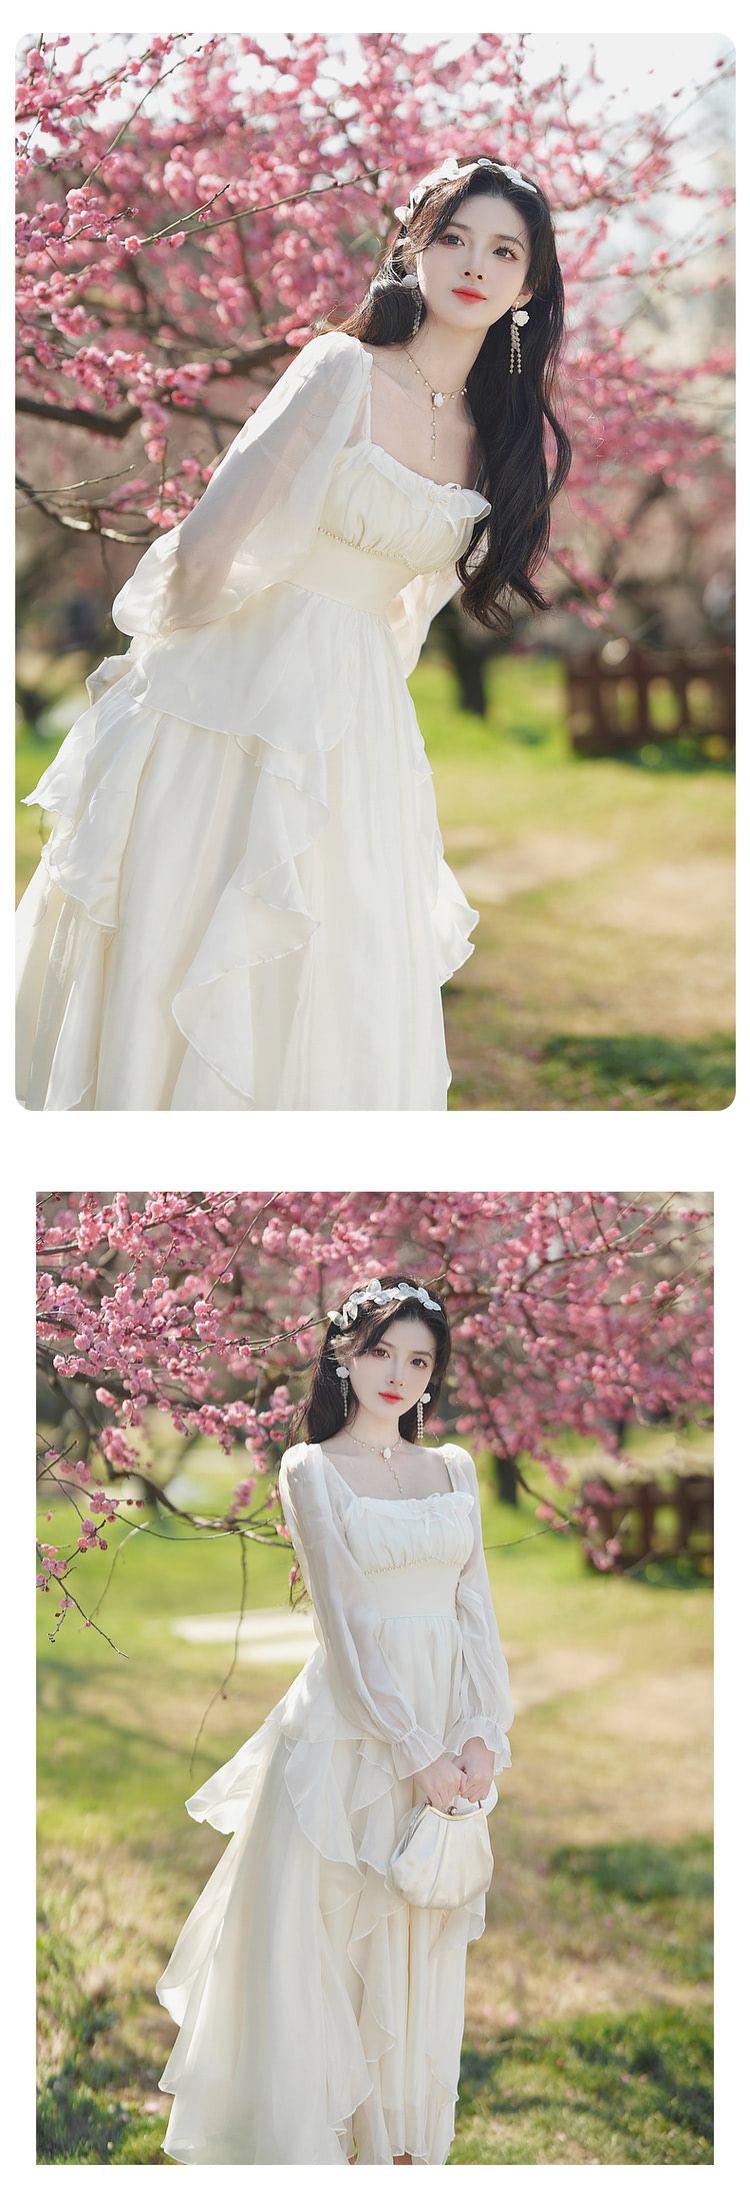 Fairy-High-Waist-Long-Sleeve-Ruffle-White-Slim-Style-Casual-Dress